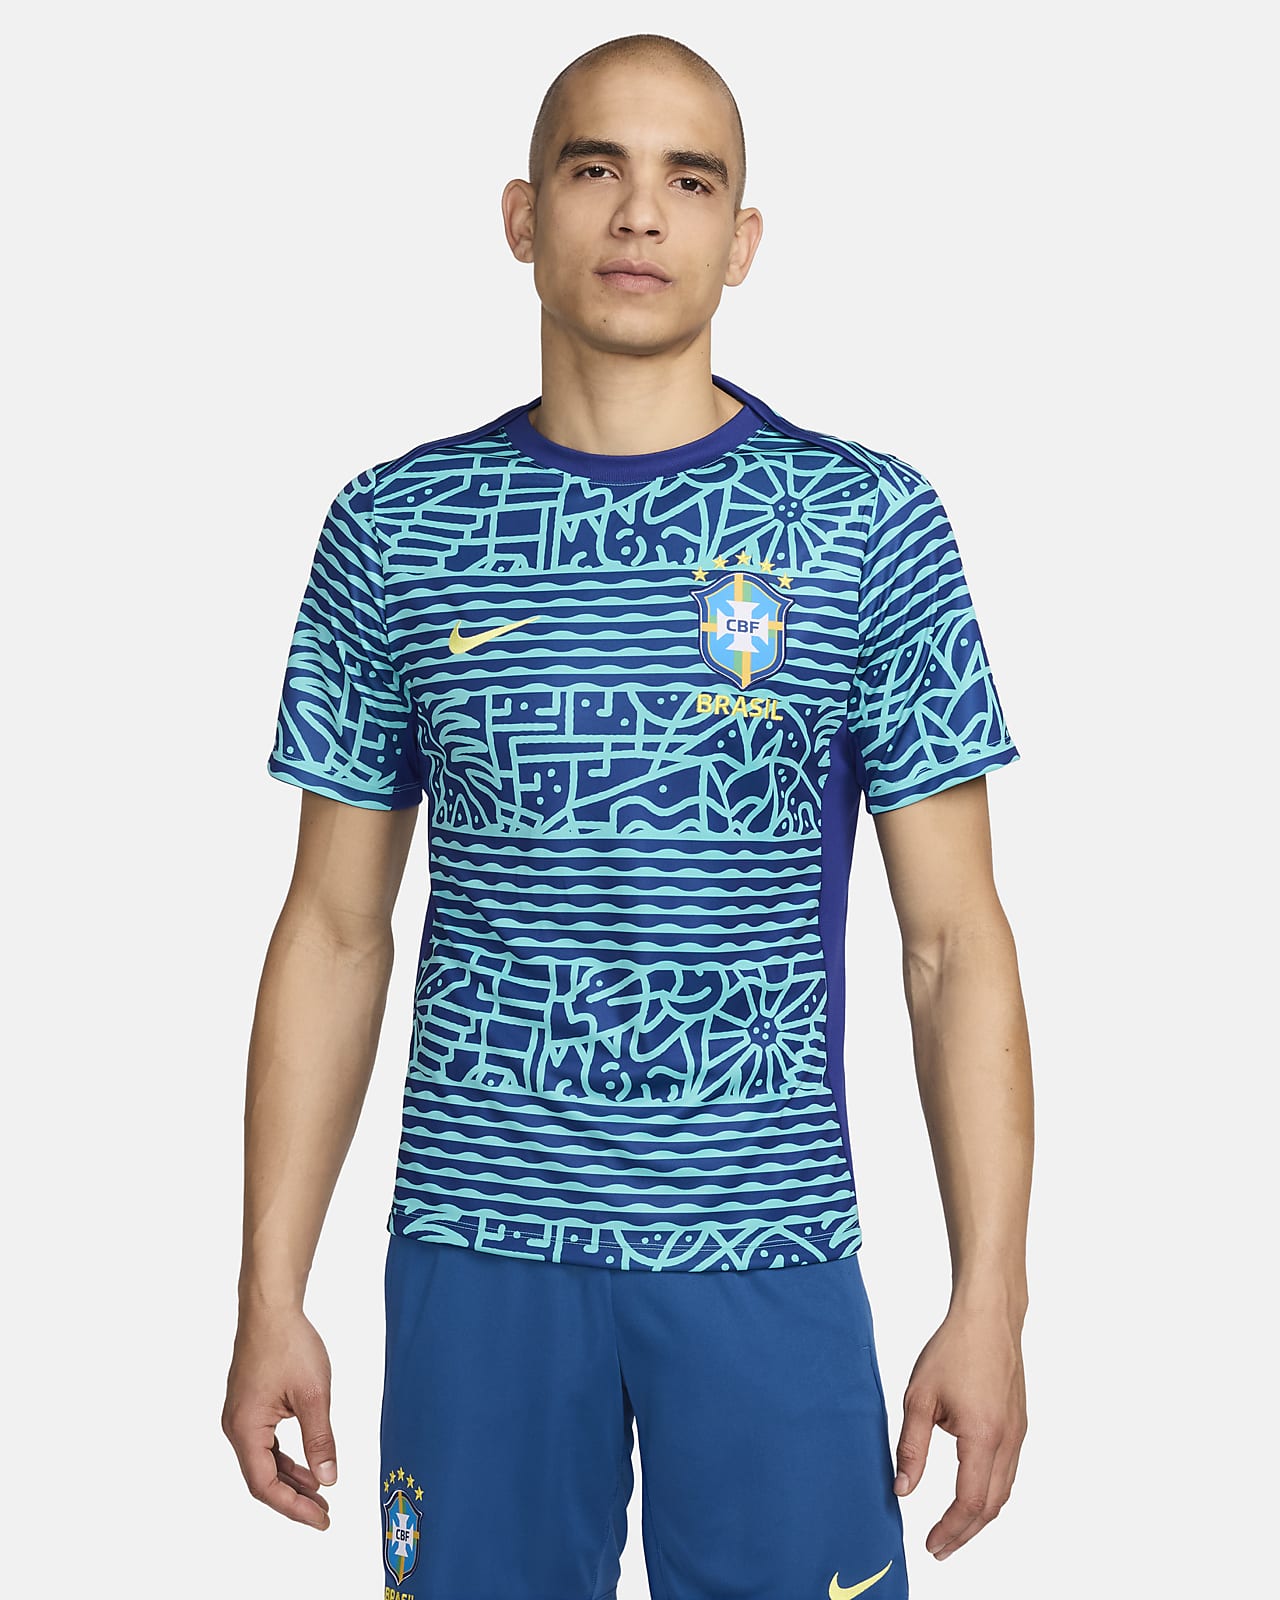 Brazil Academy Pro Men's Nike Dri-FIT Soccer Pre-Match Short-Sleeve Top